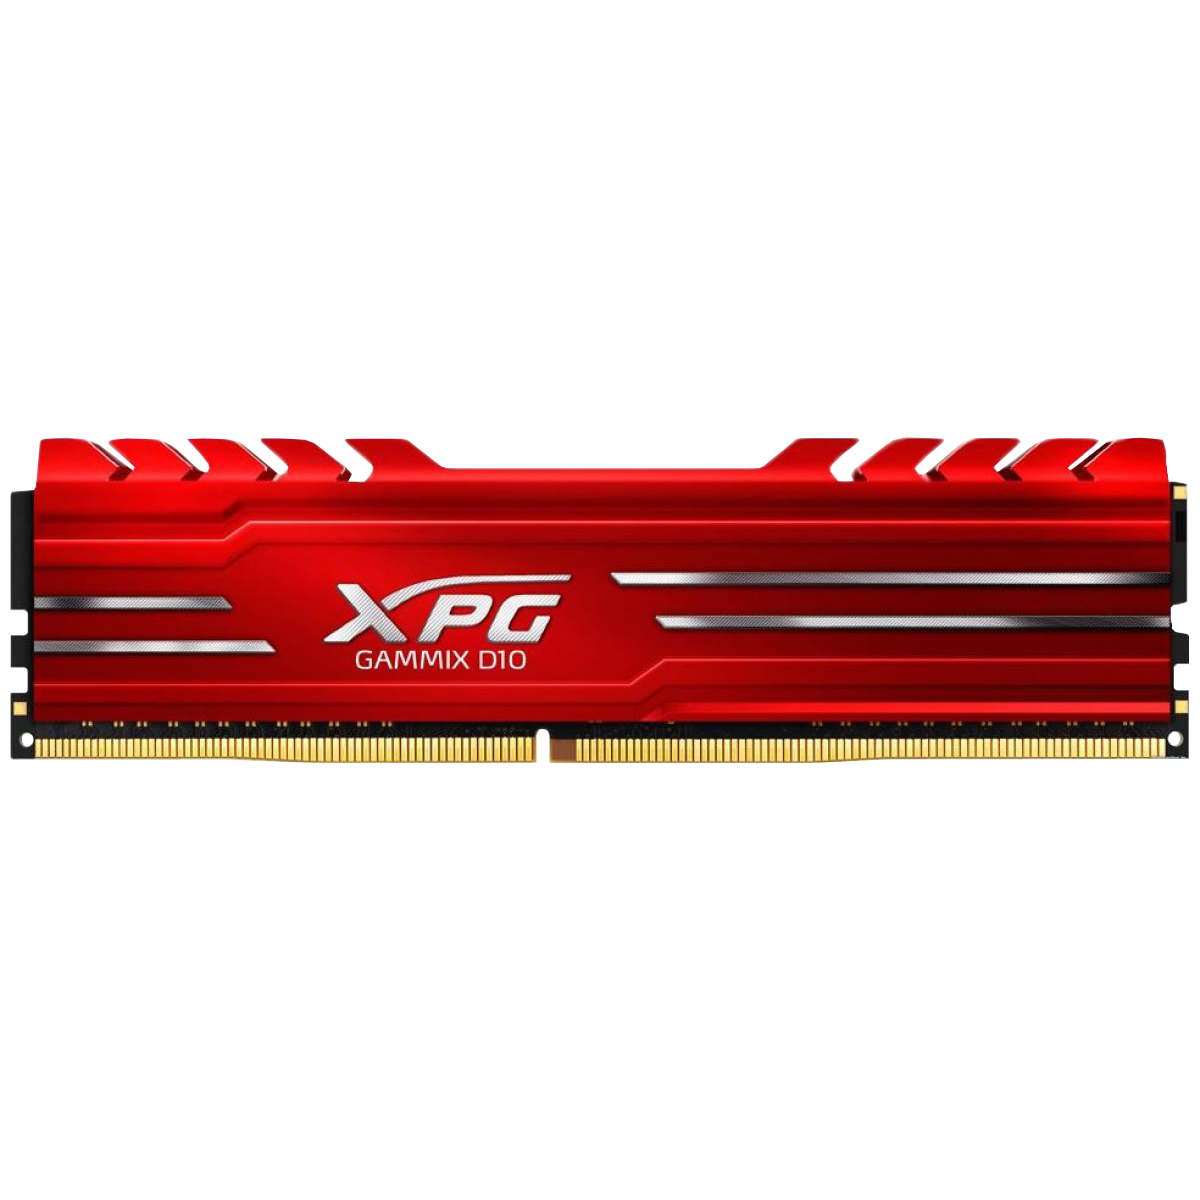 Memória DDR4 XPG Gammix D10, 8GB 3000Mhz, Red, AX4U30008G16A-SR10